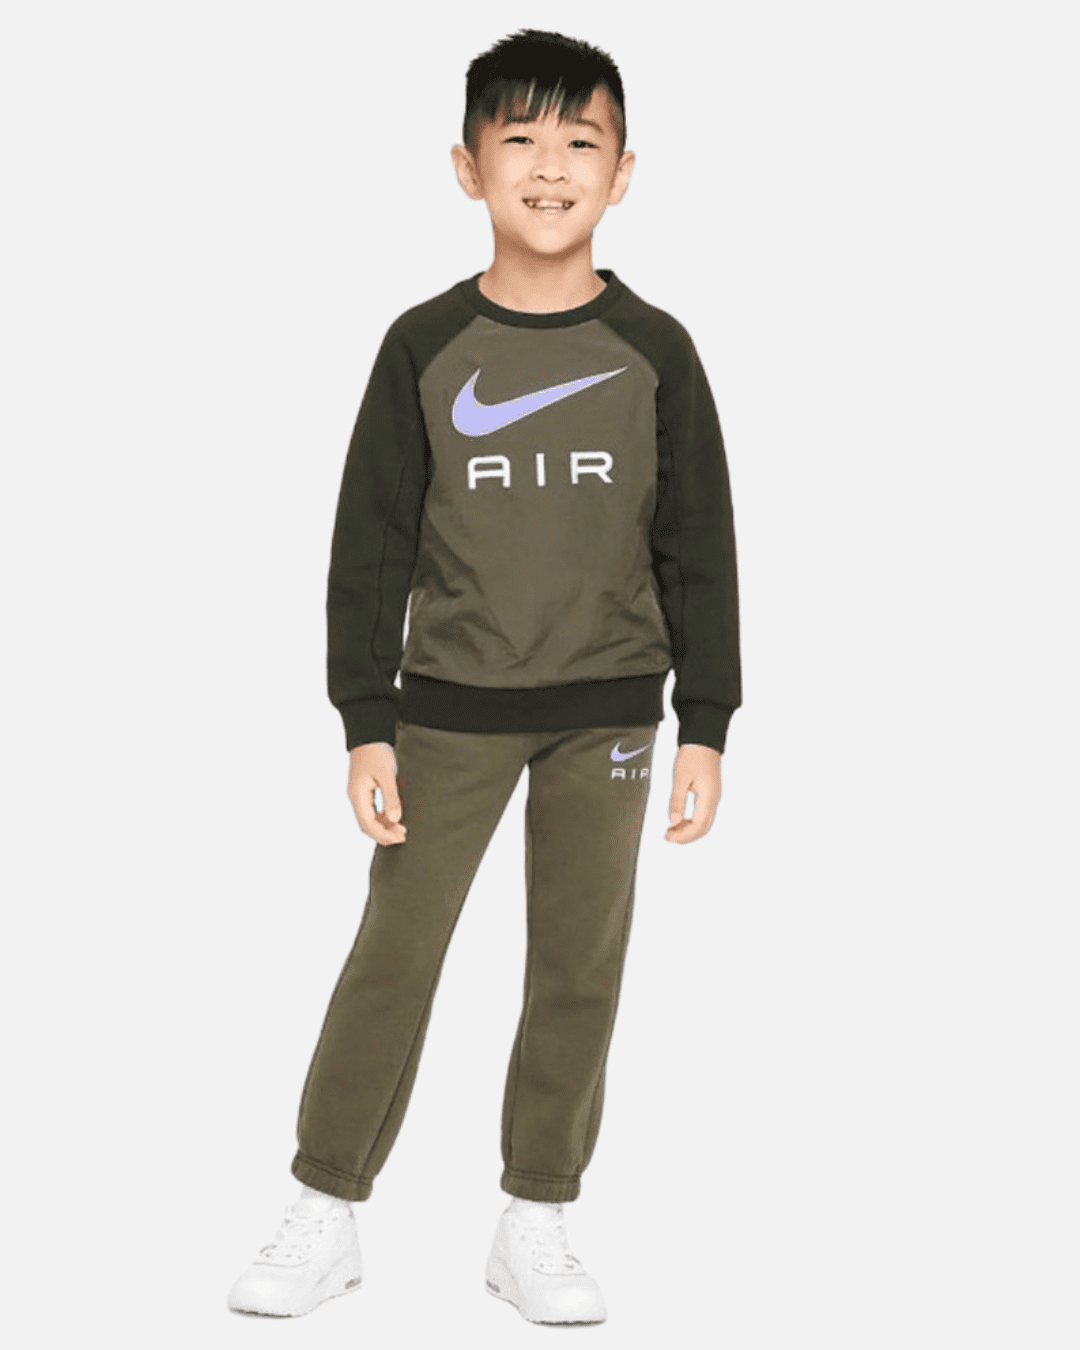 Nike Air Crew Kids Sportswear Set - Khaki 